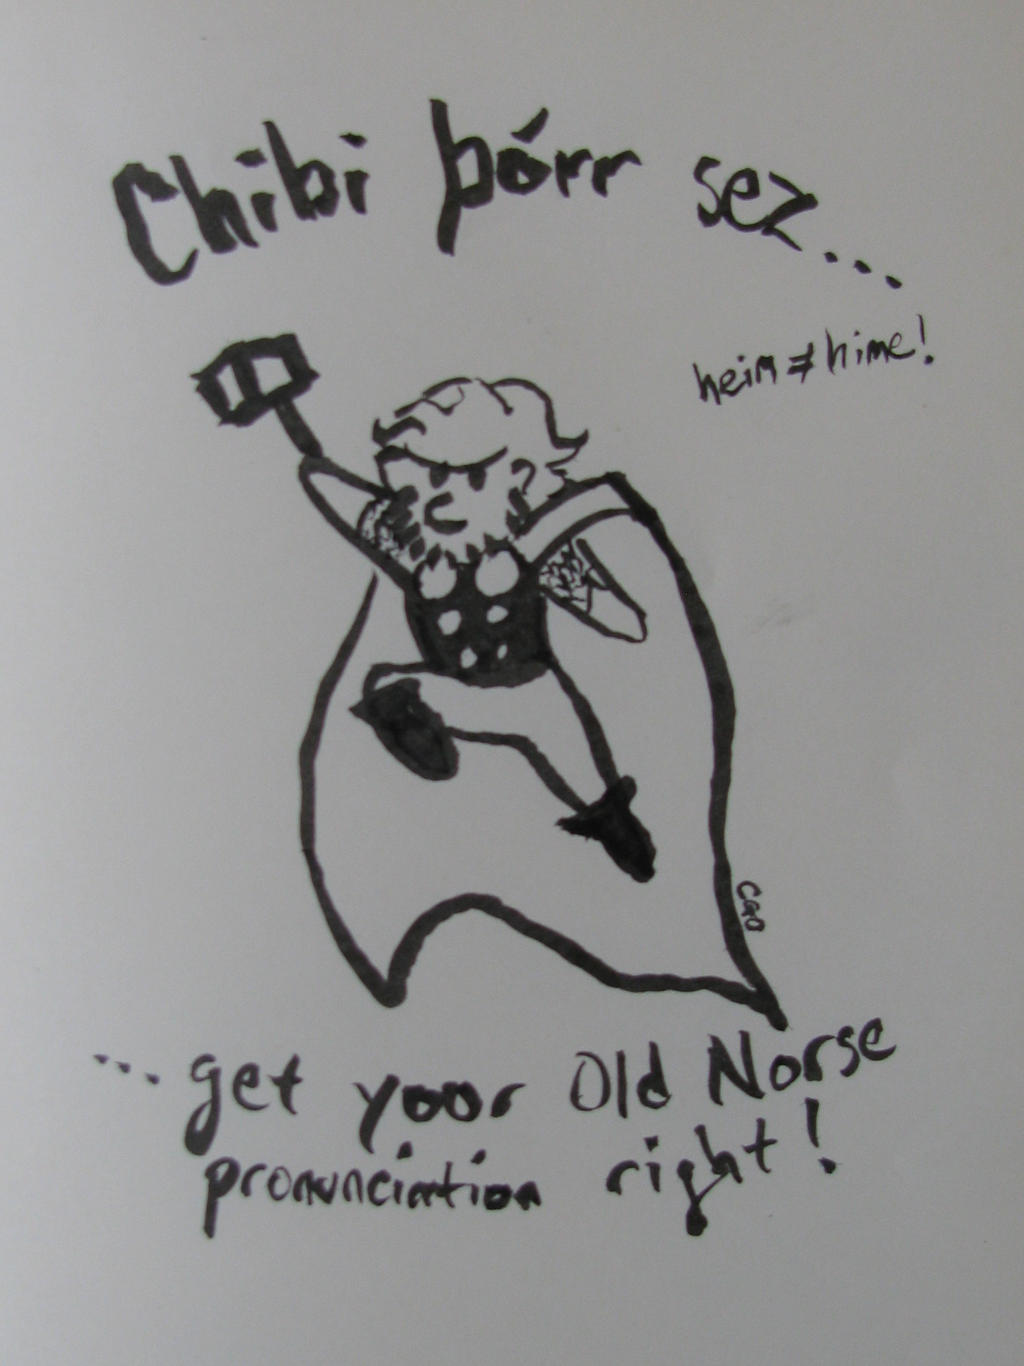 Chibi Thor on Pronunciation